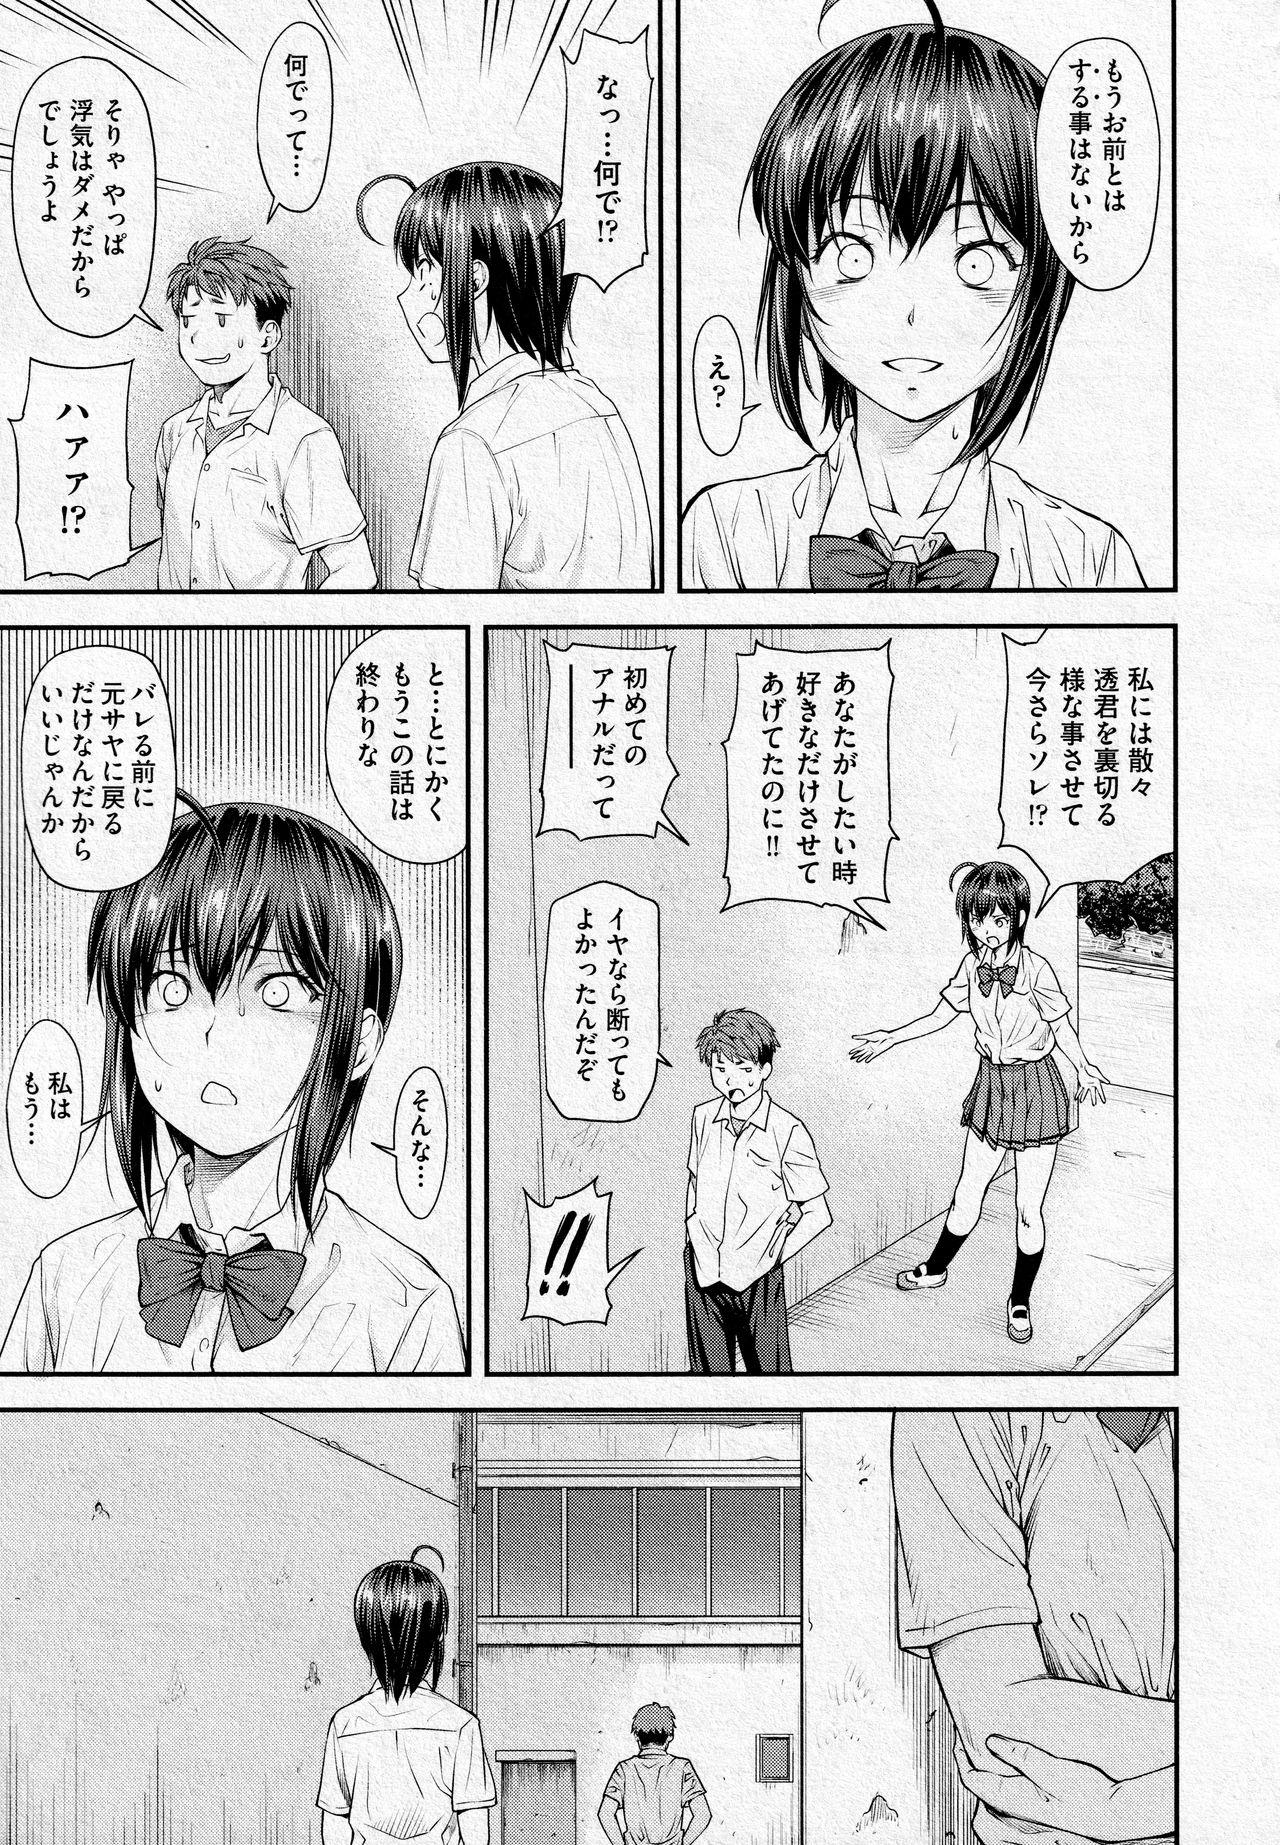 Female Kaname Date #13 Gostosas - Page 5